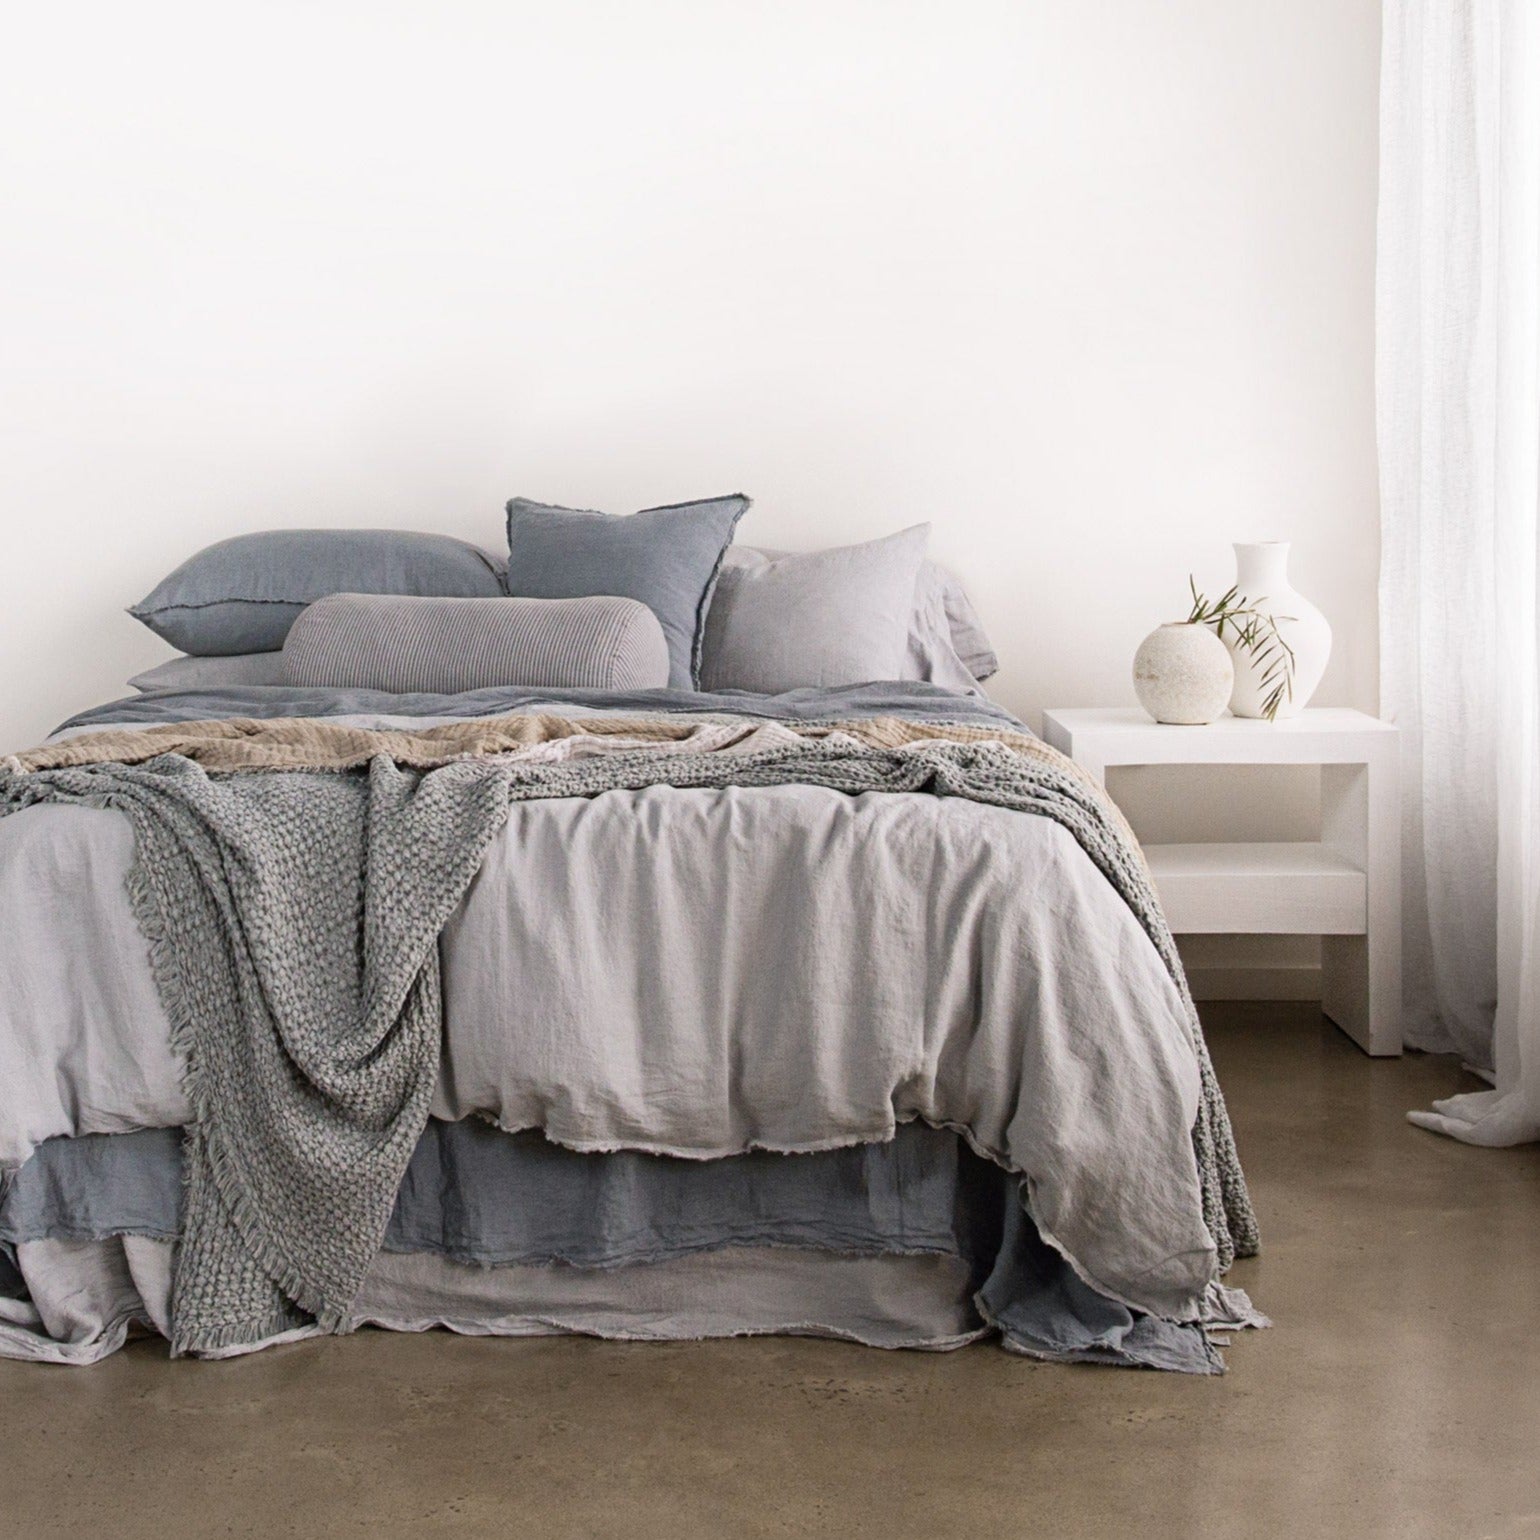 Basix Linen Pillowcase | Pale Grey | Hale Mercantile Co.